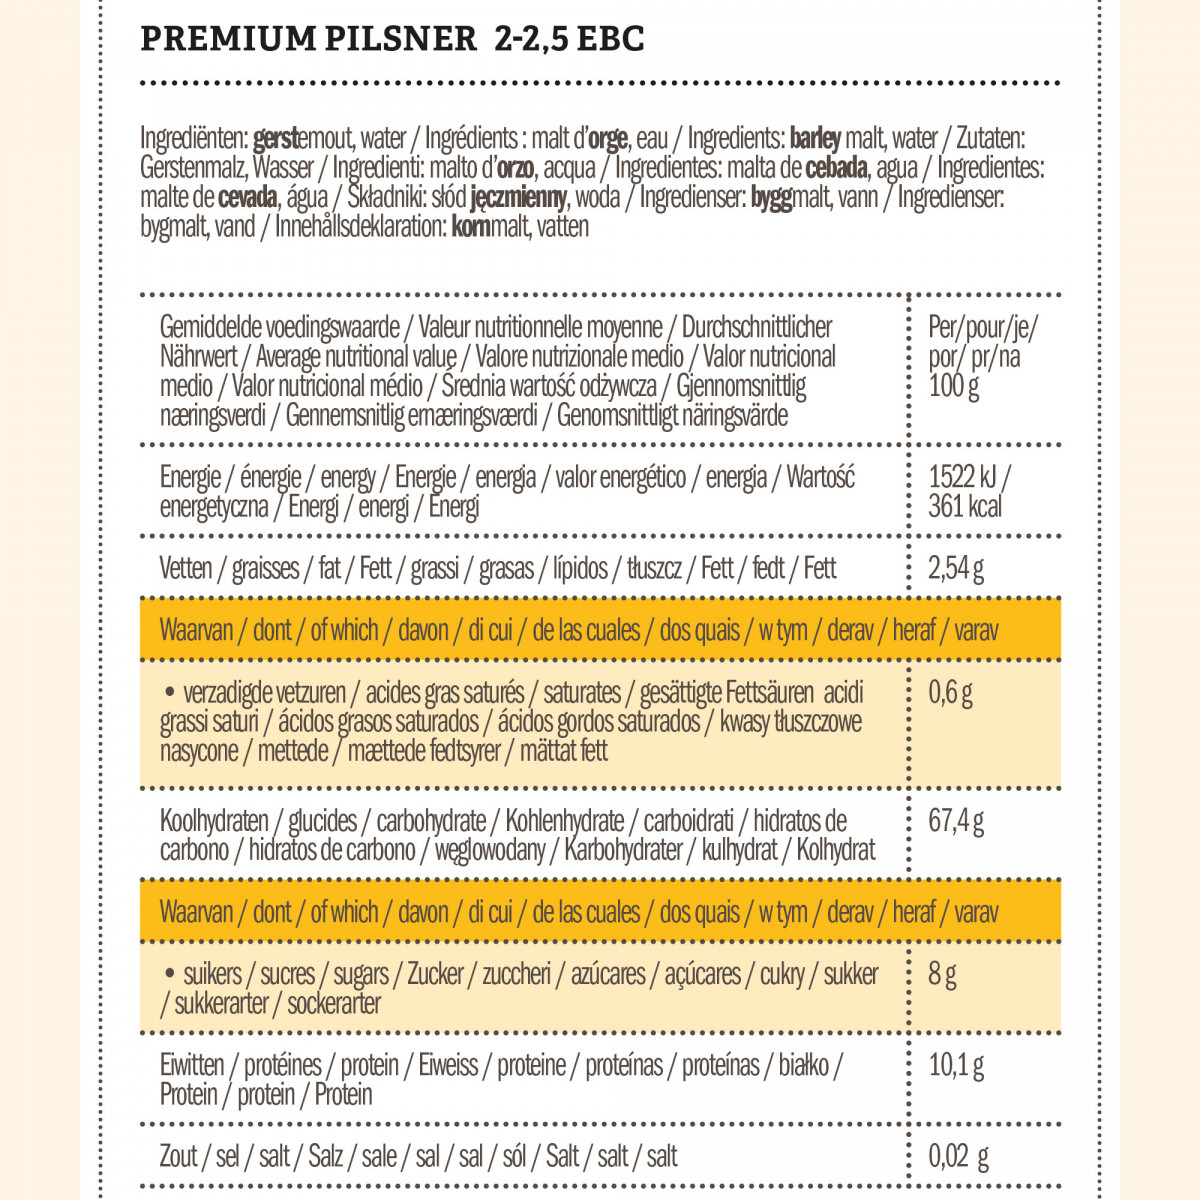 Weyermann® Extra Pale Premium Pilsner 2 - 2,5 EBC 5 kg